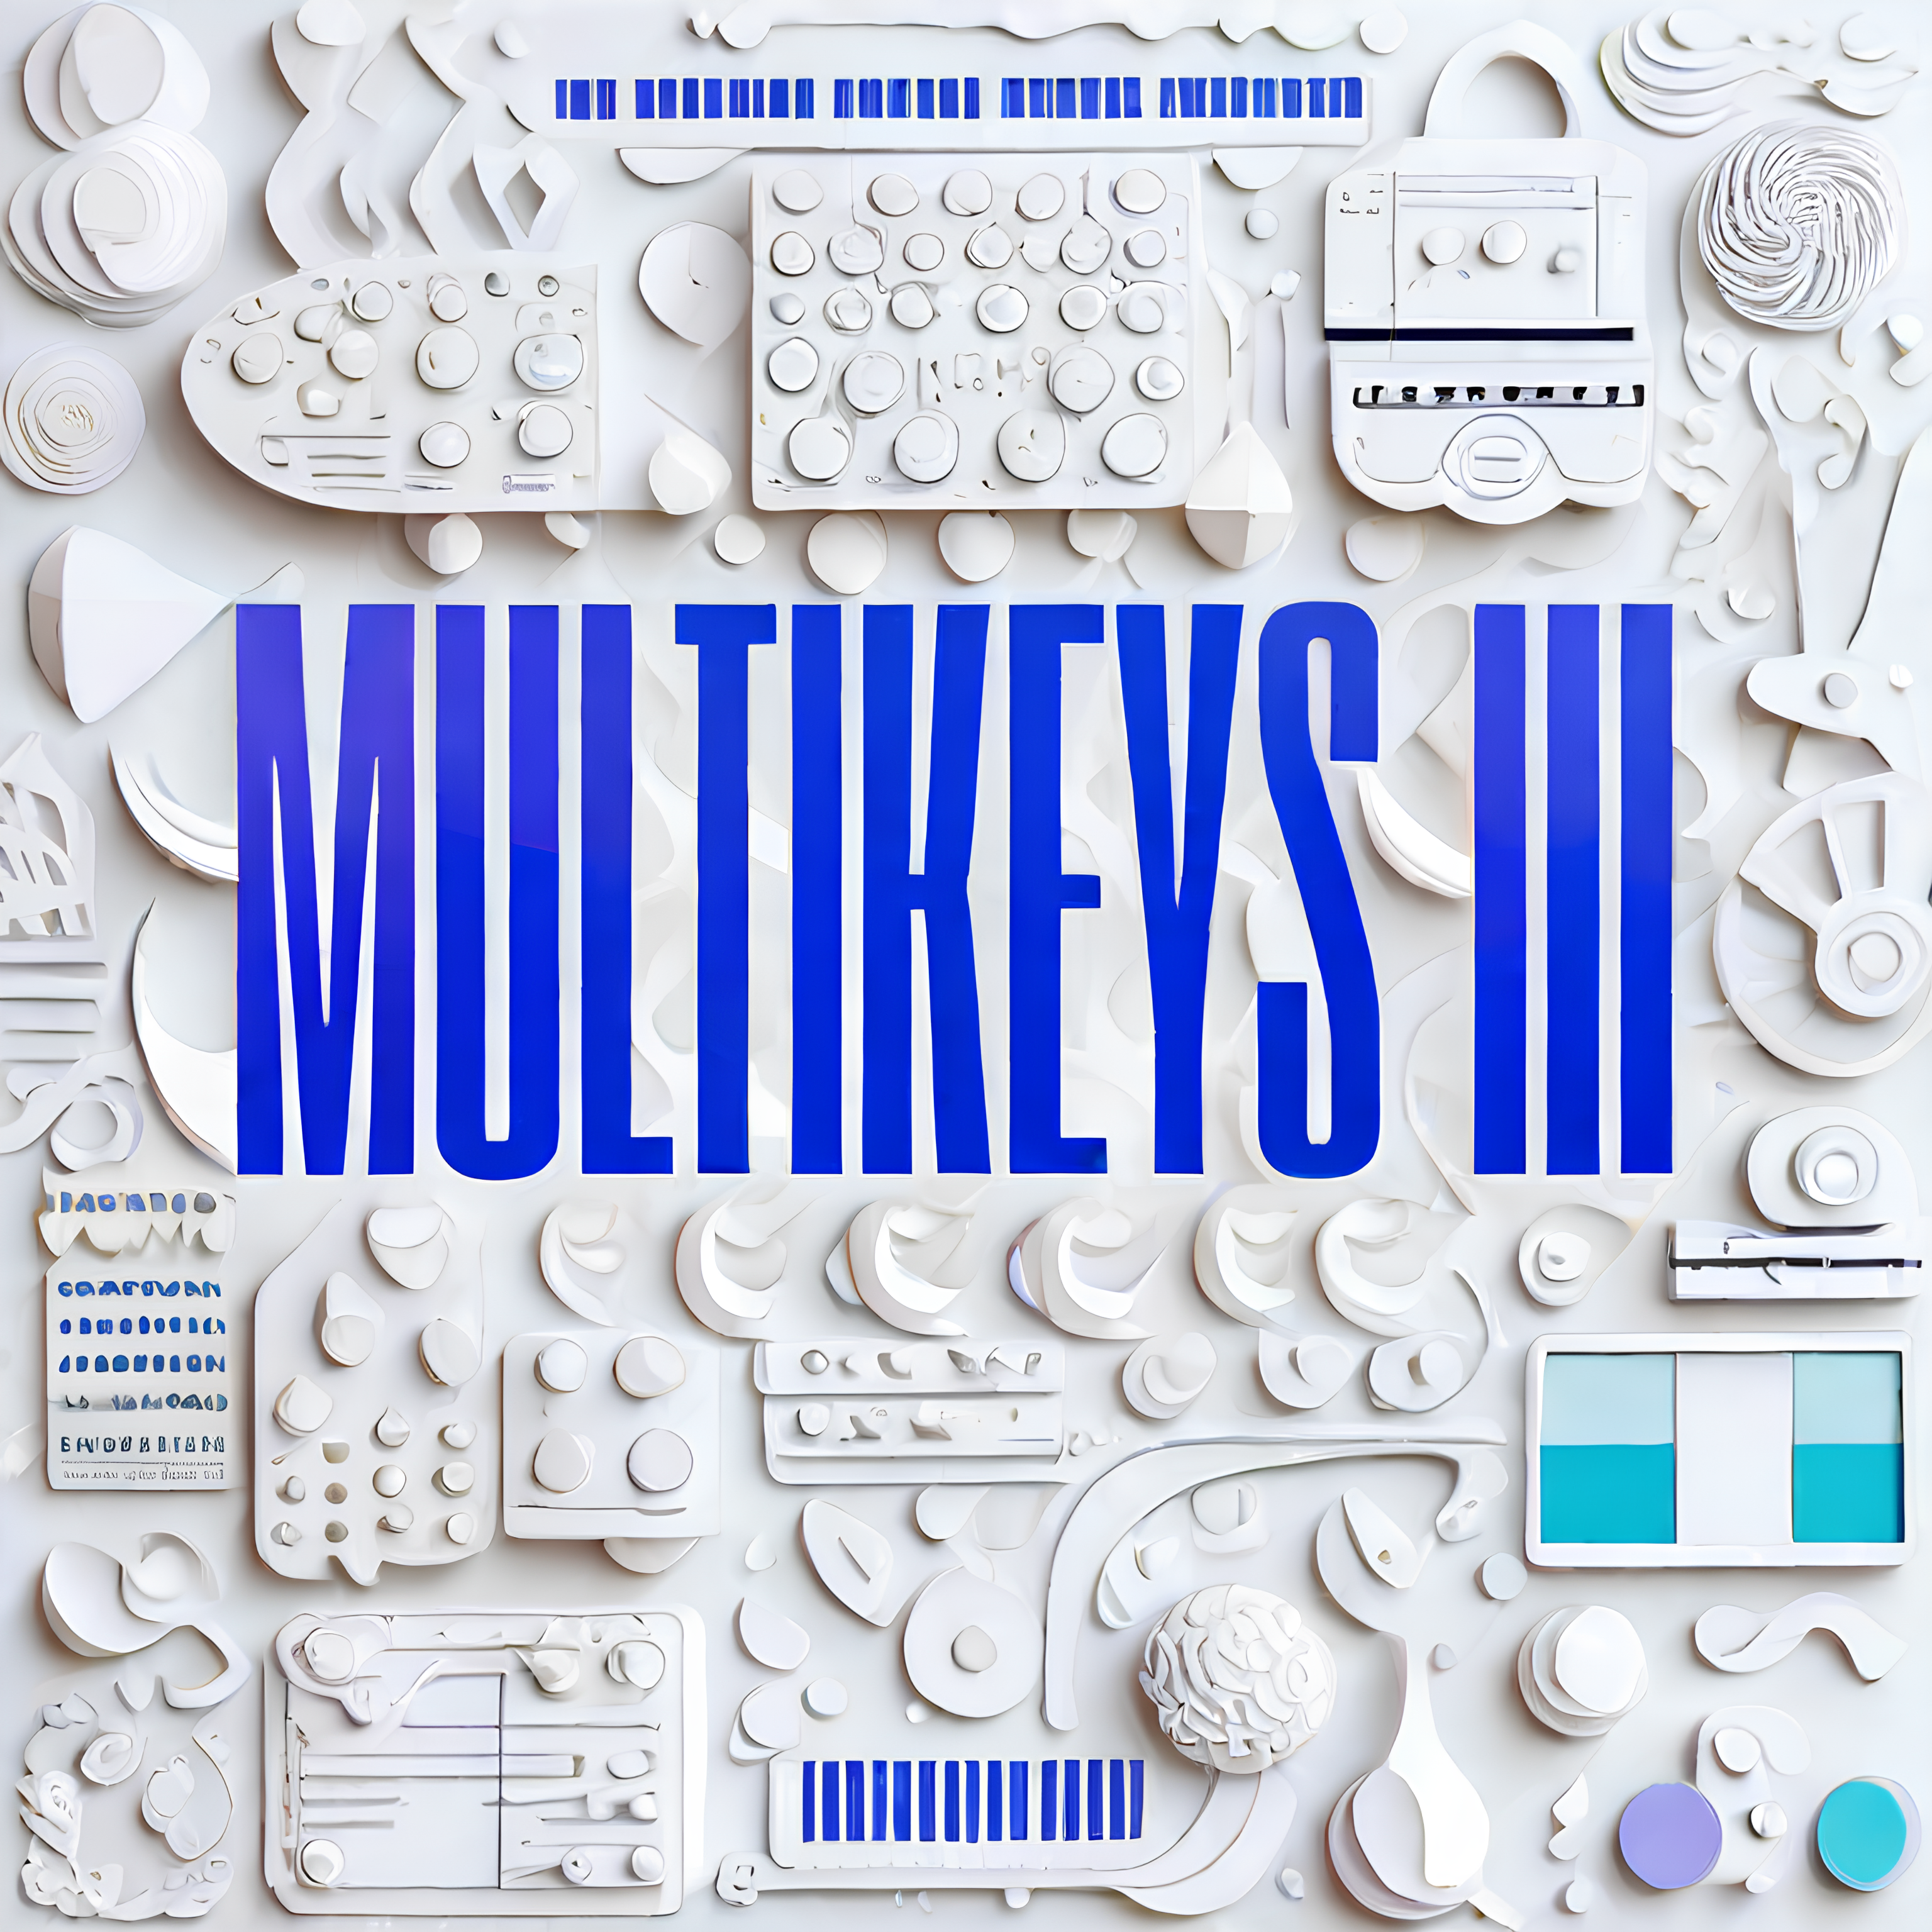 MULTIKEYS III (ANALOG LAB BANK)